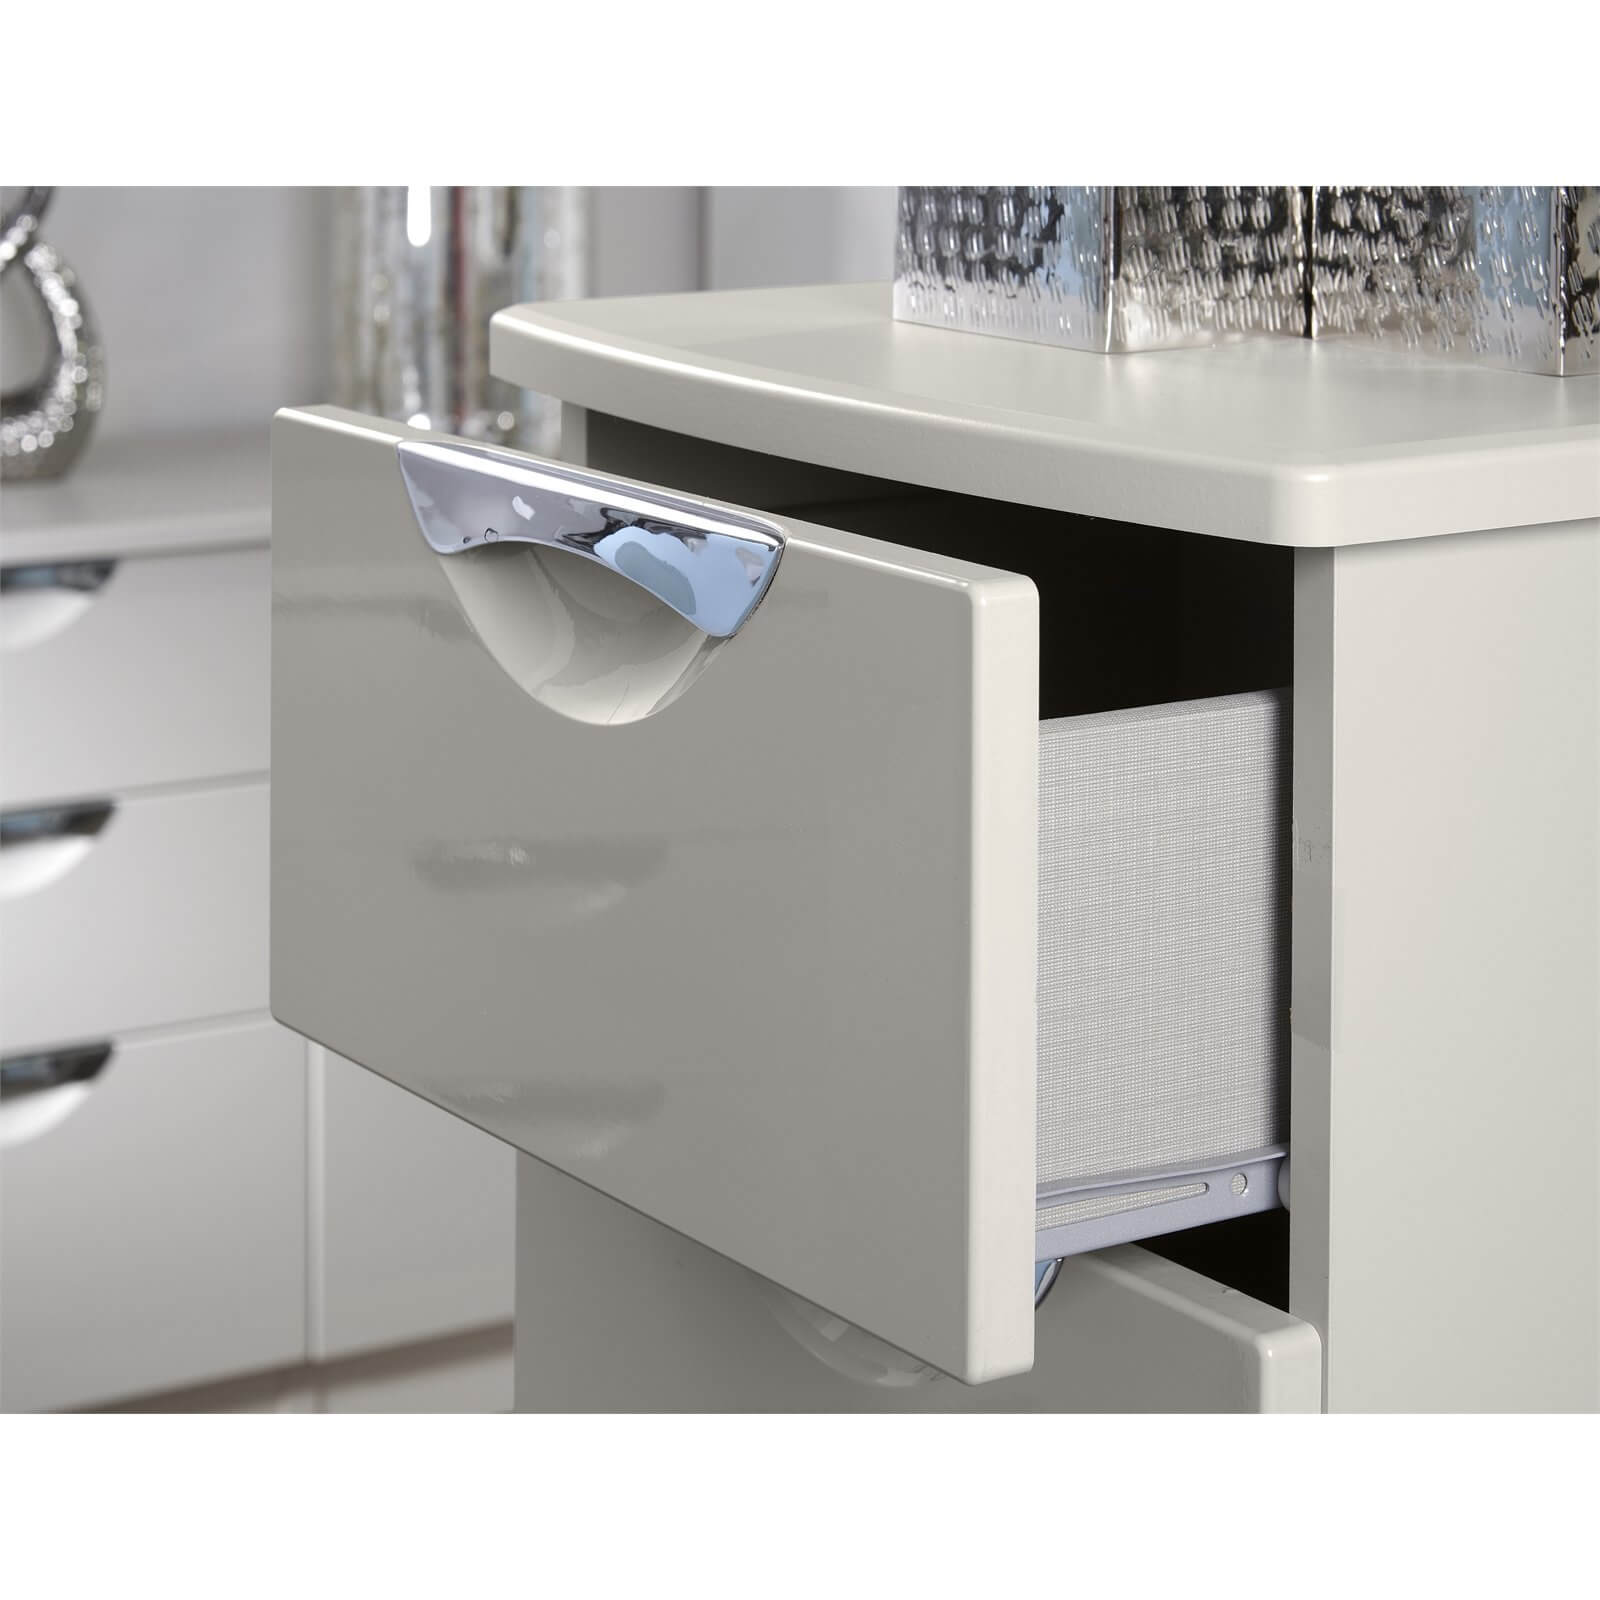 Portofino Kaschmir Gloss 2 Drawer Bedside Cabinet